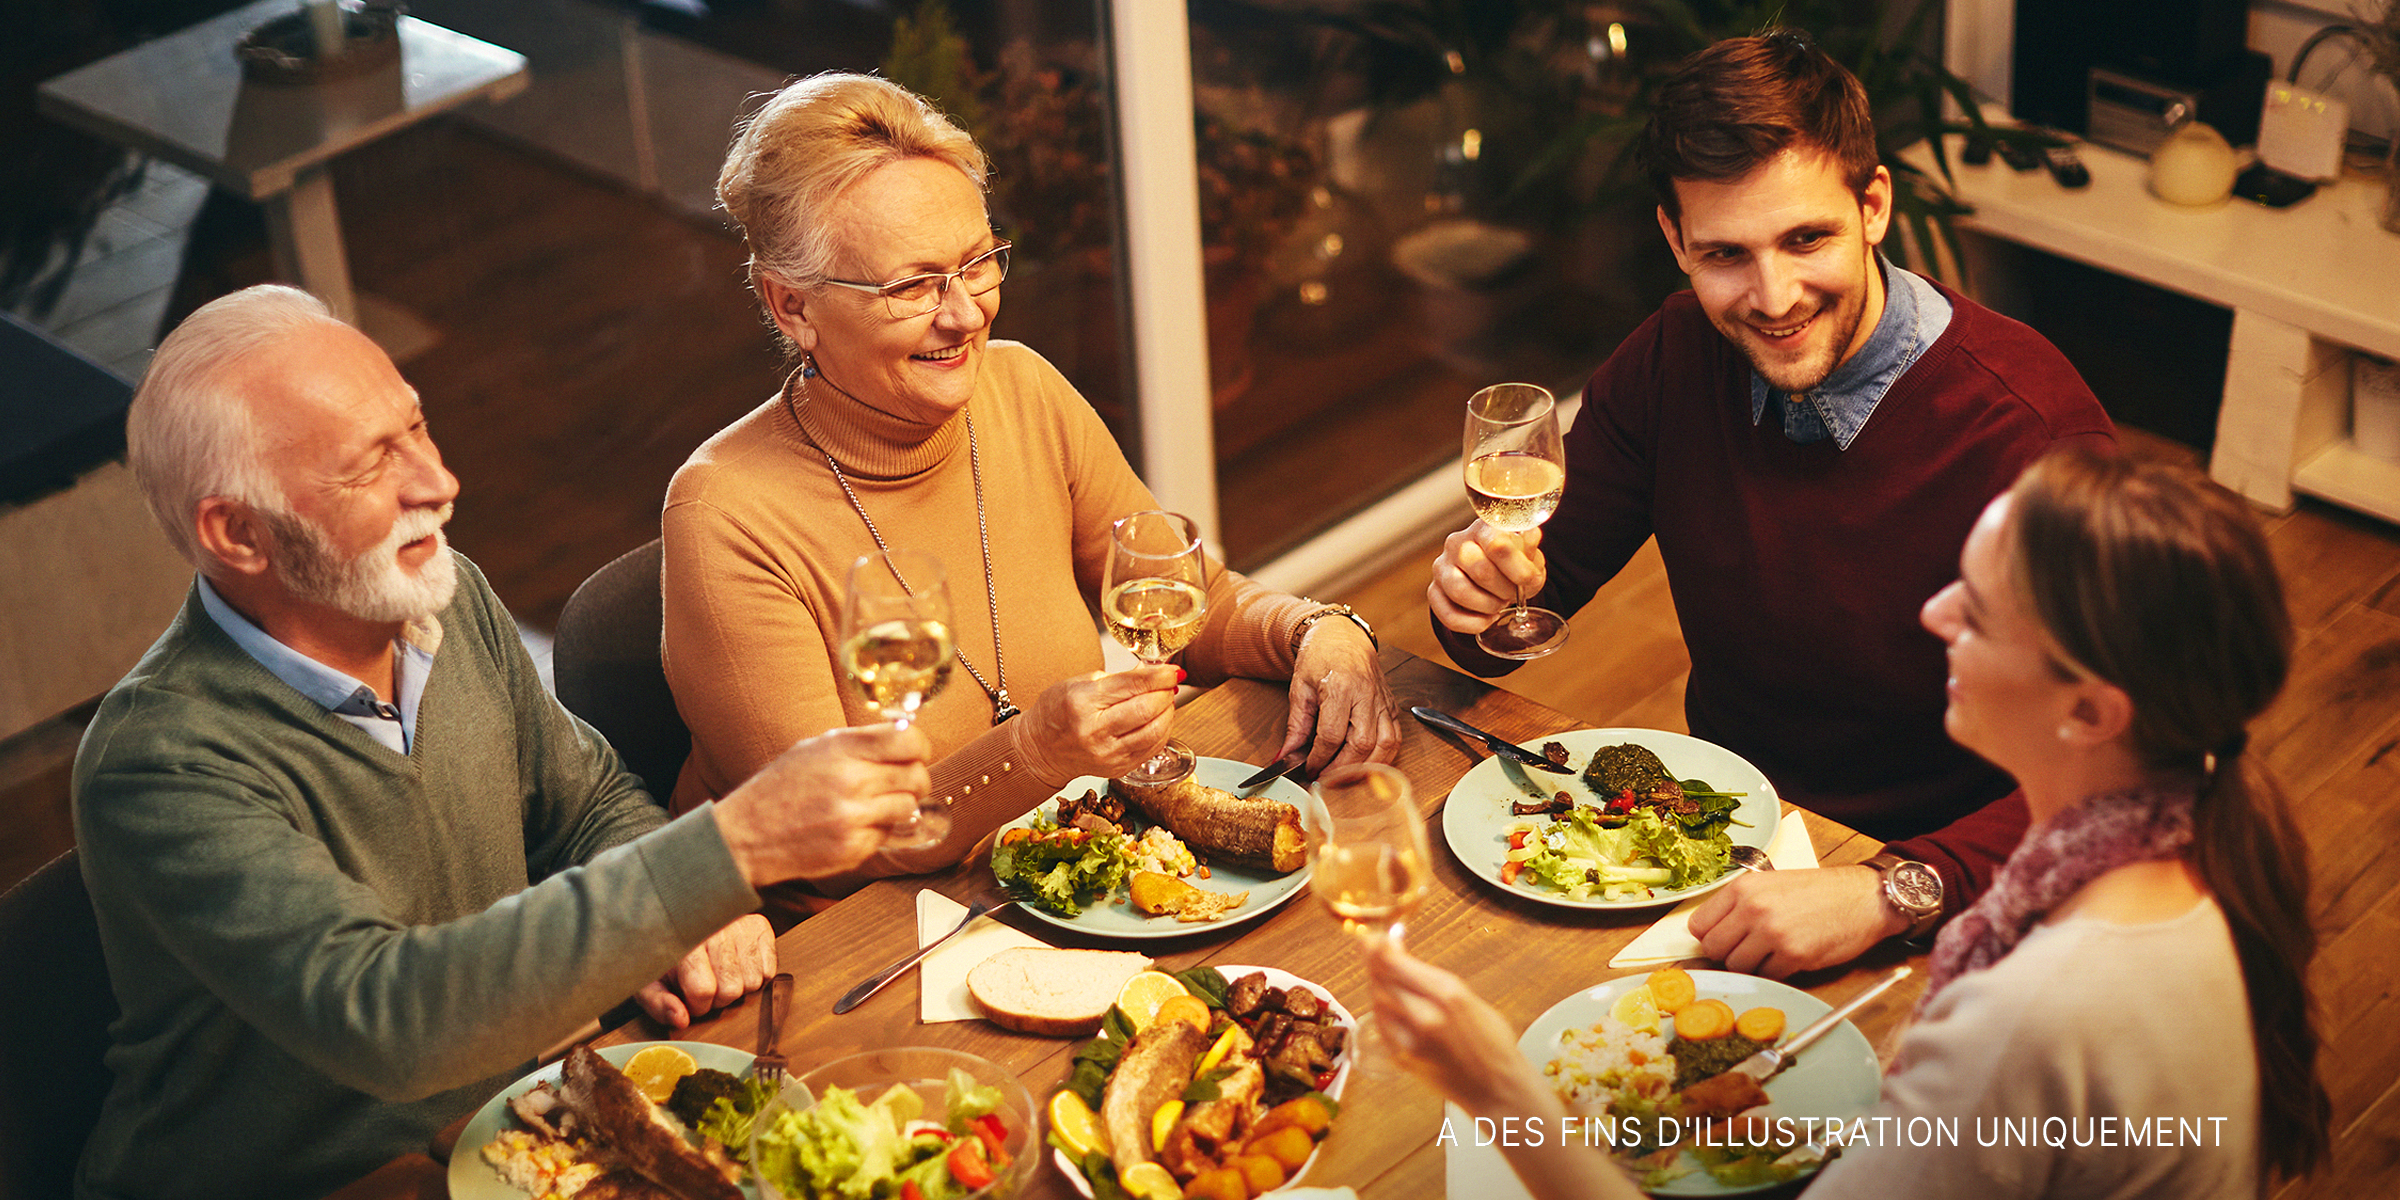 Une famille heureuse partageant un toast pendant le dîner | Source : Shutterstock